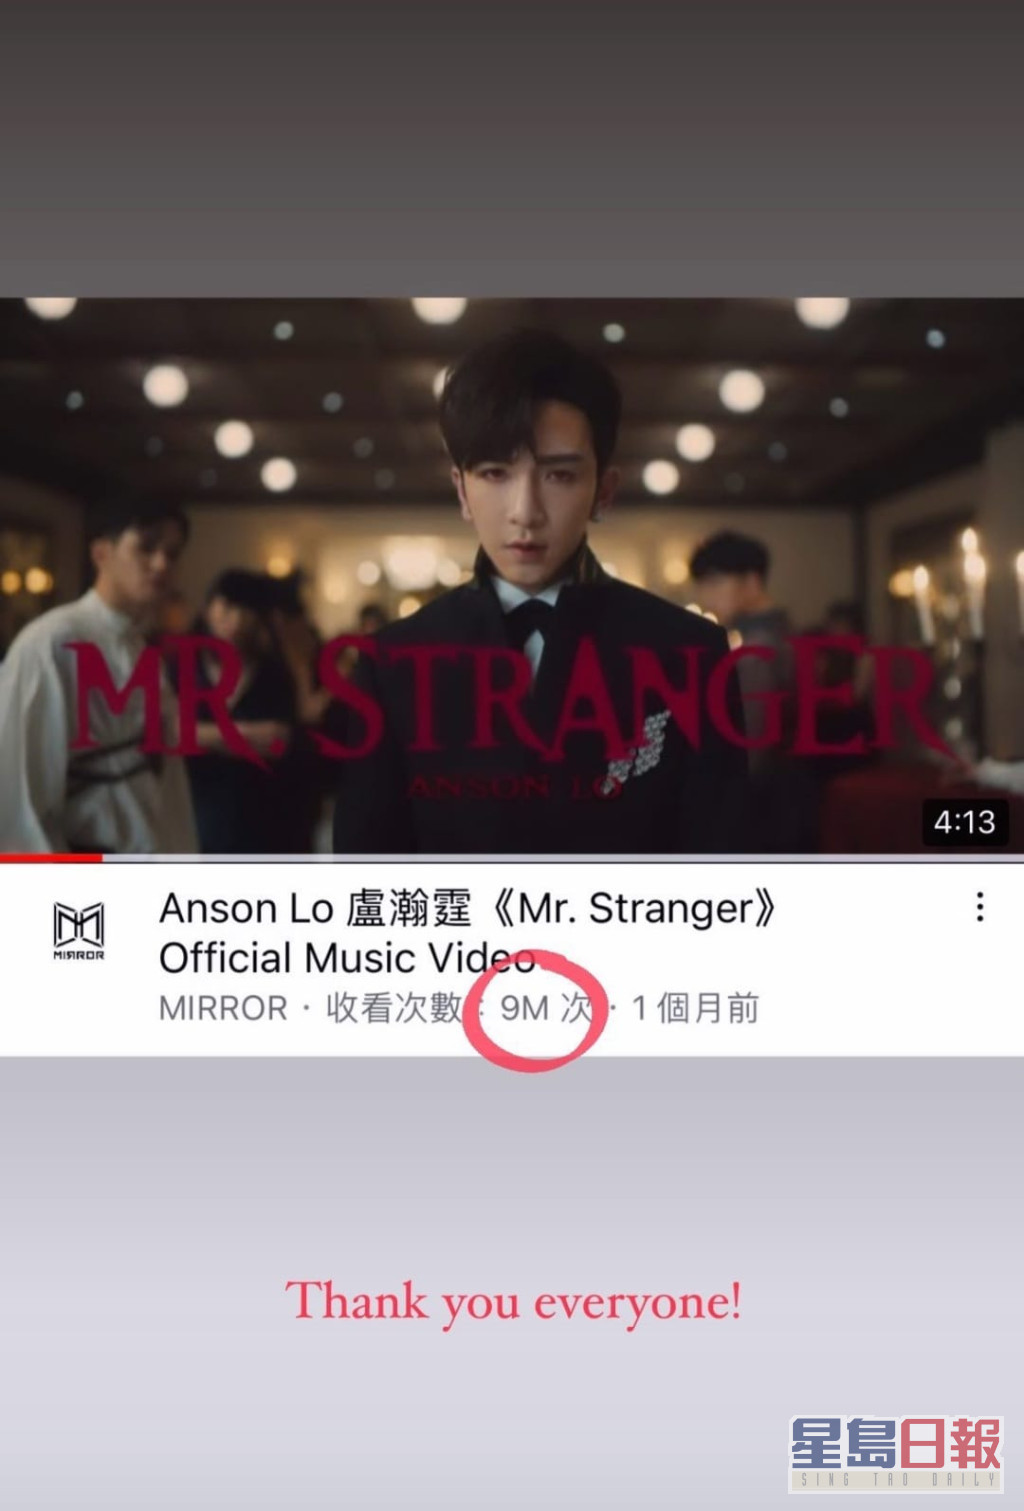 《Mr. Stranger》MV在YouTube上架个几月，点击冲破900万。